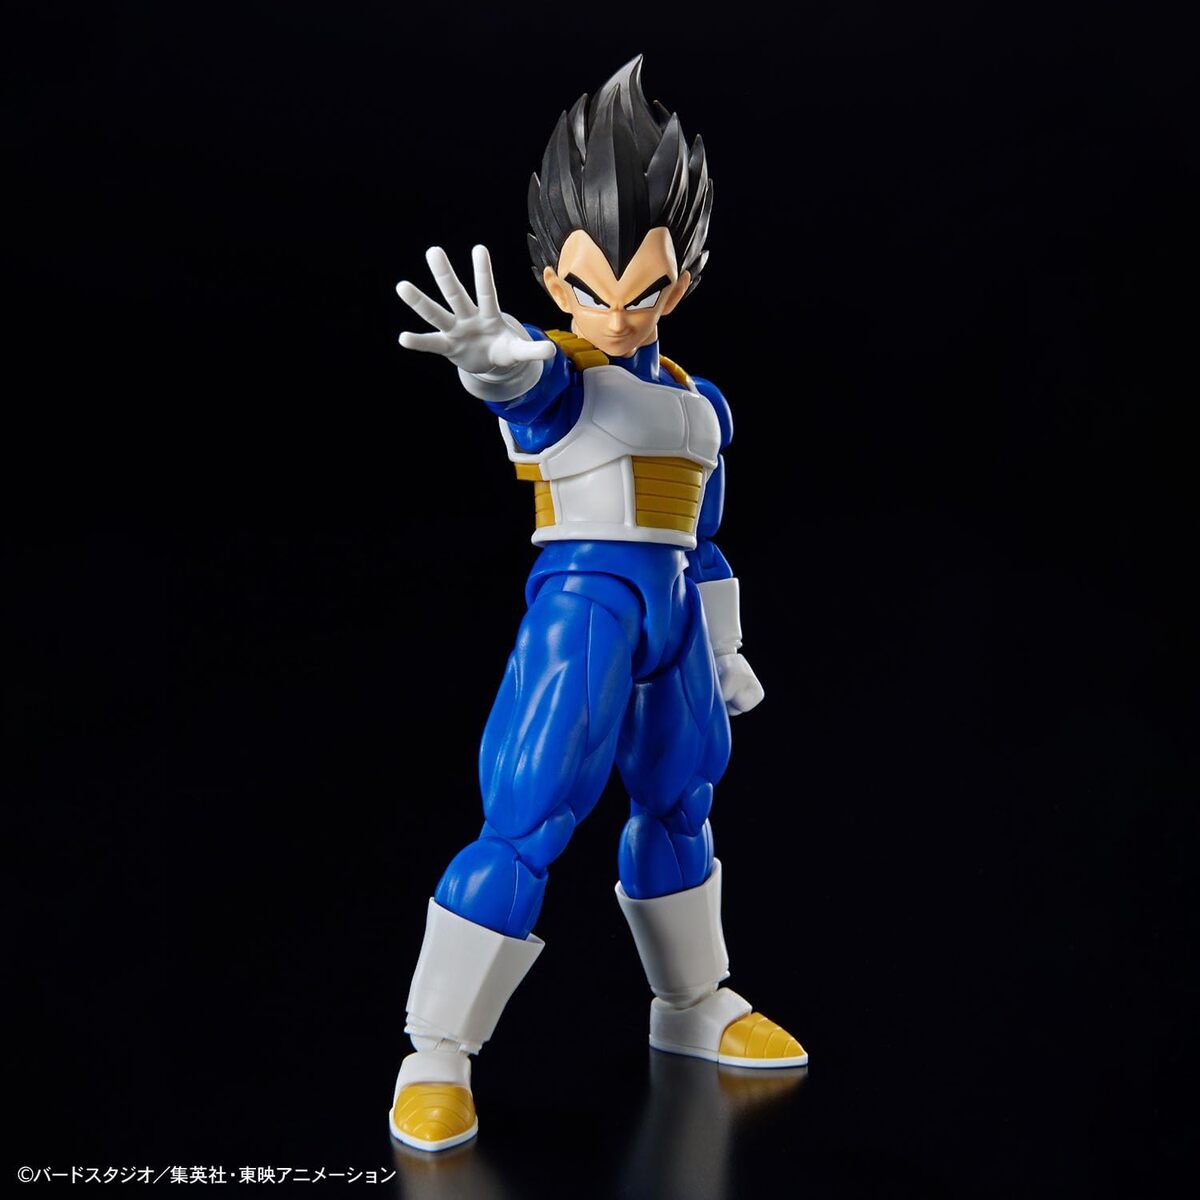 New Figure-rise Standard Dragon Ball Son Goku NEW SPEC Ver. Plastic Model